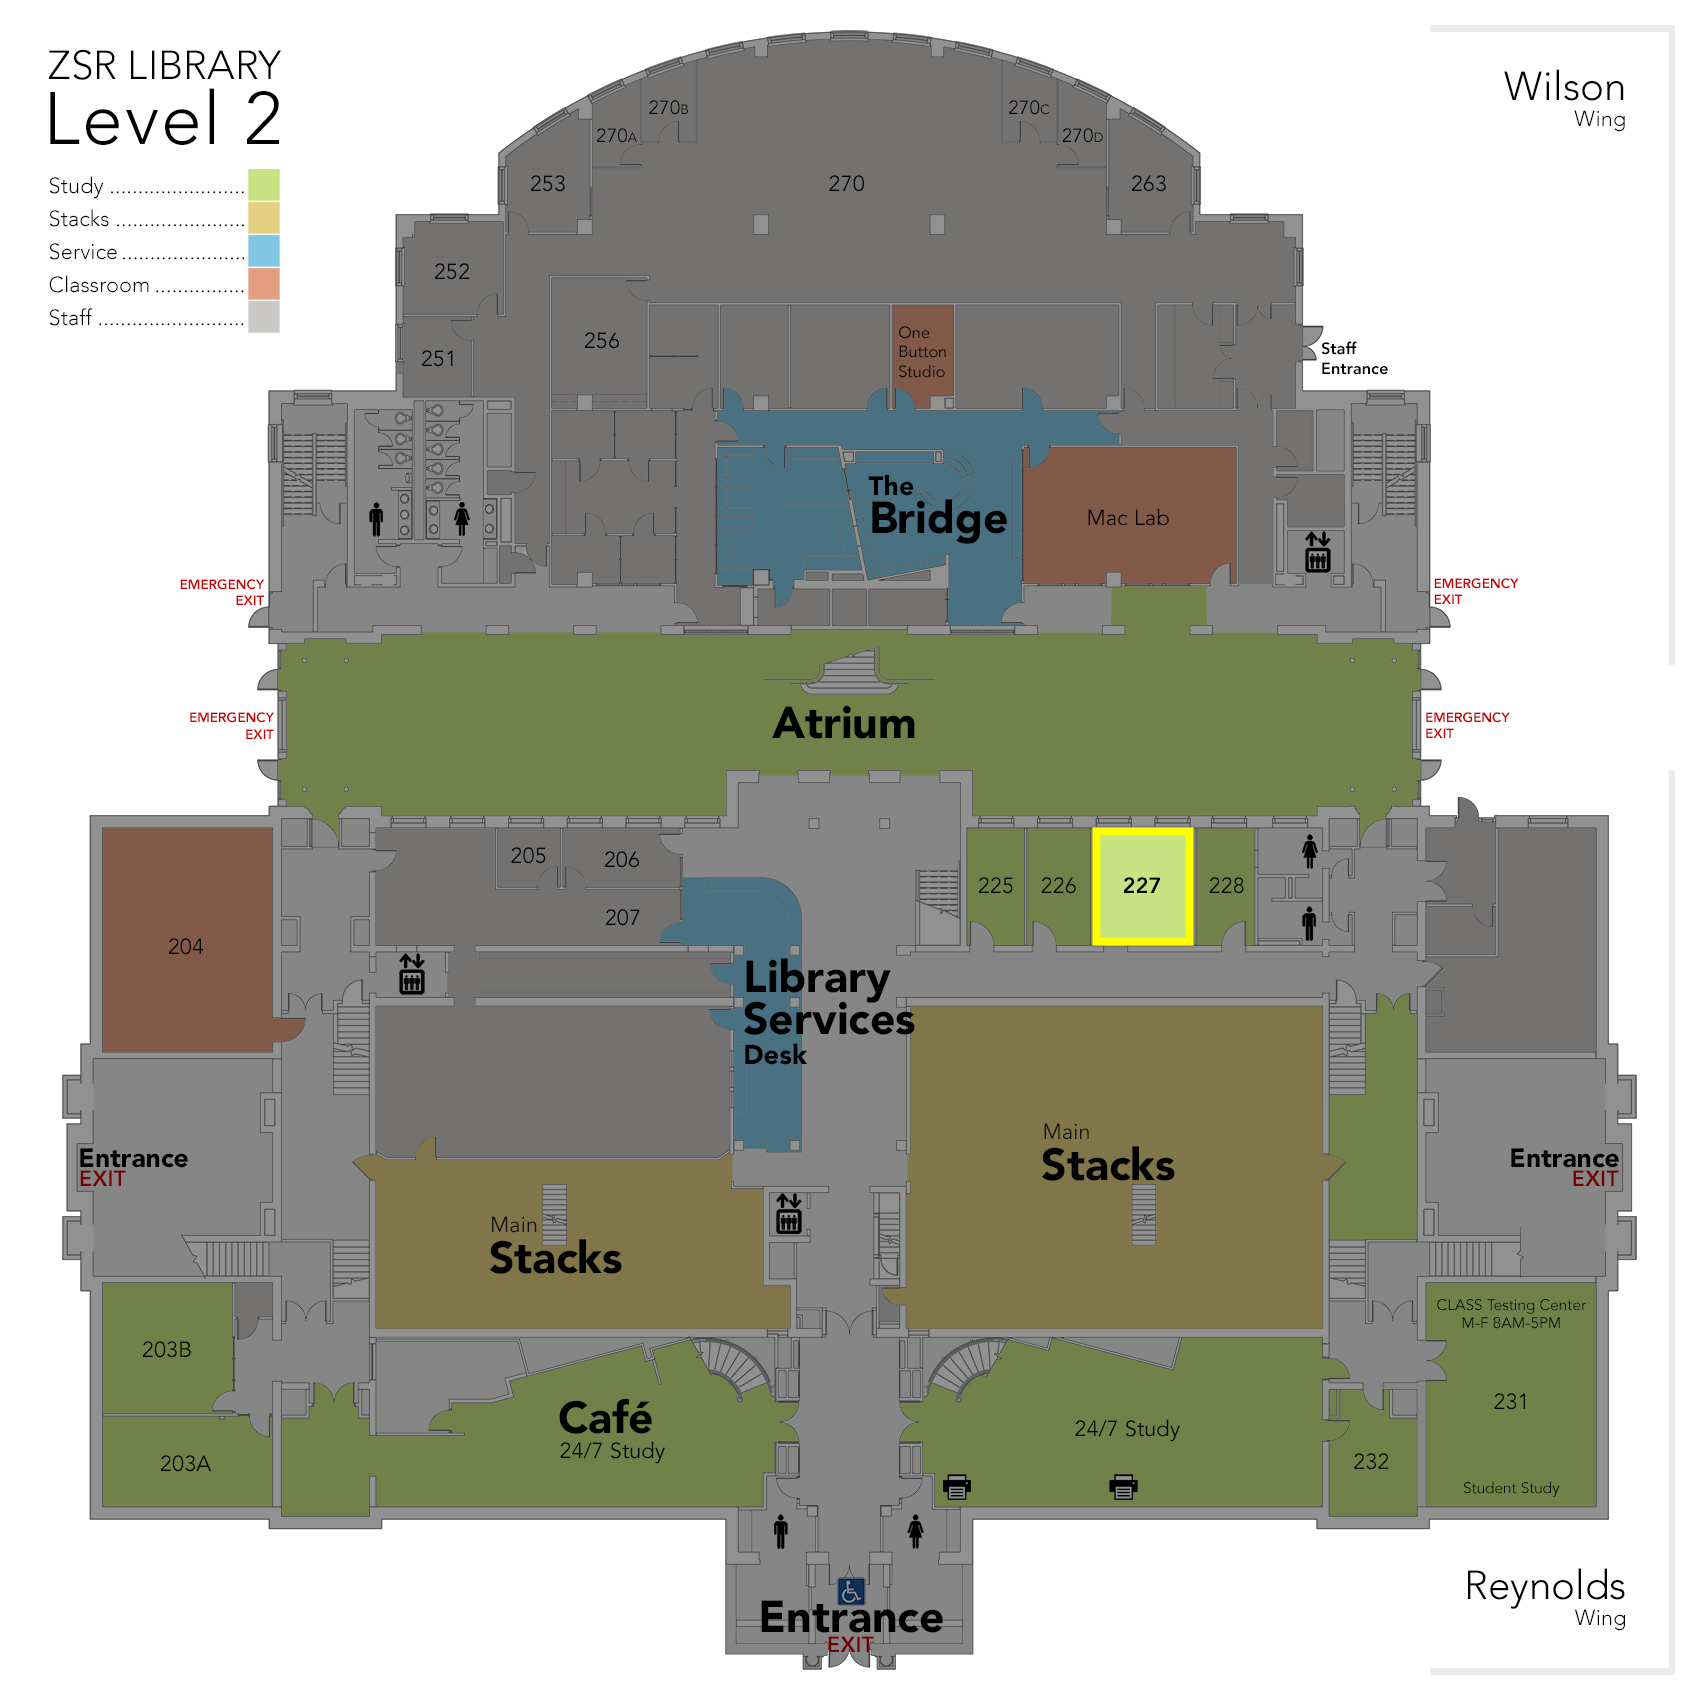 Level 2 Study Room 227 map